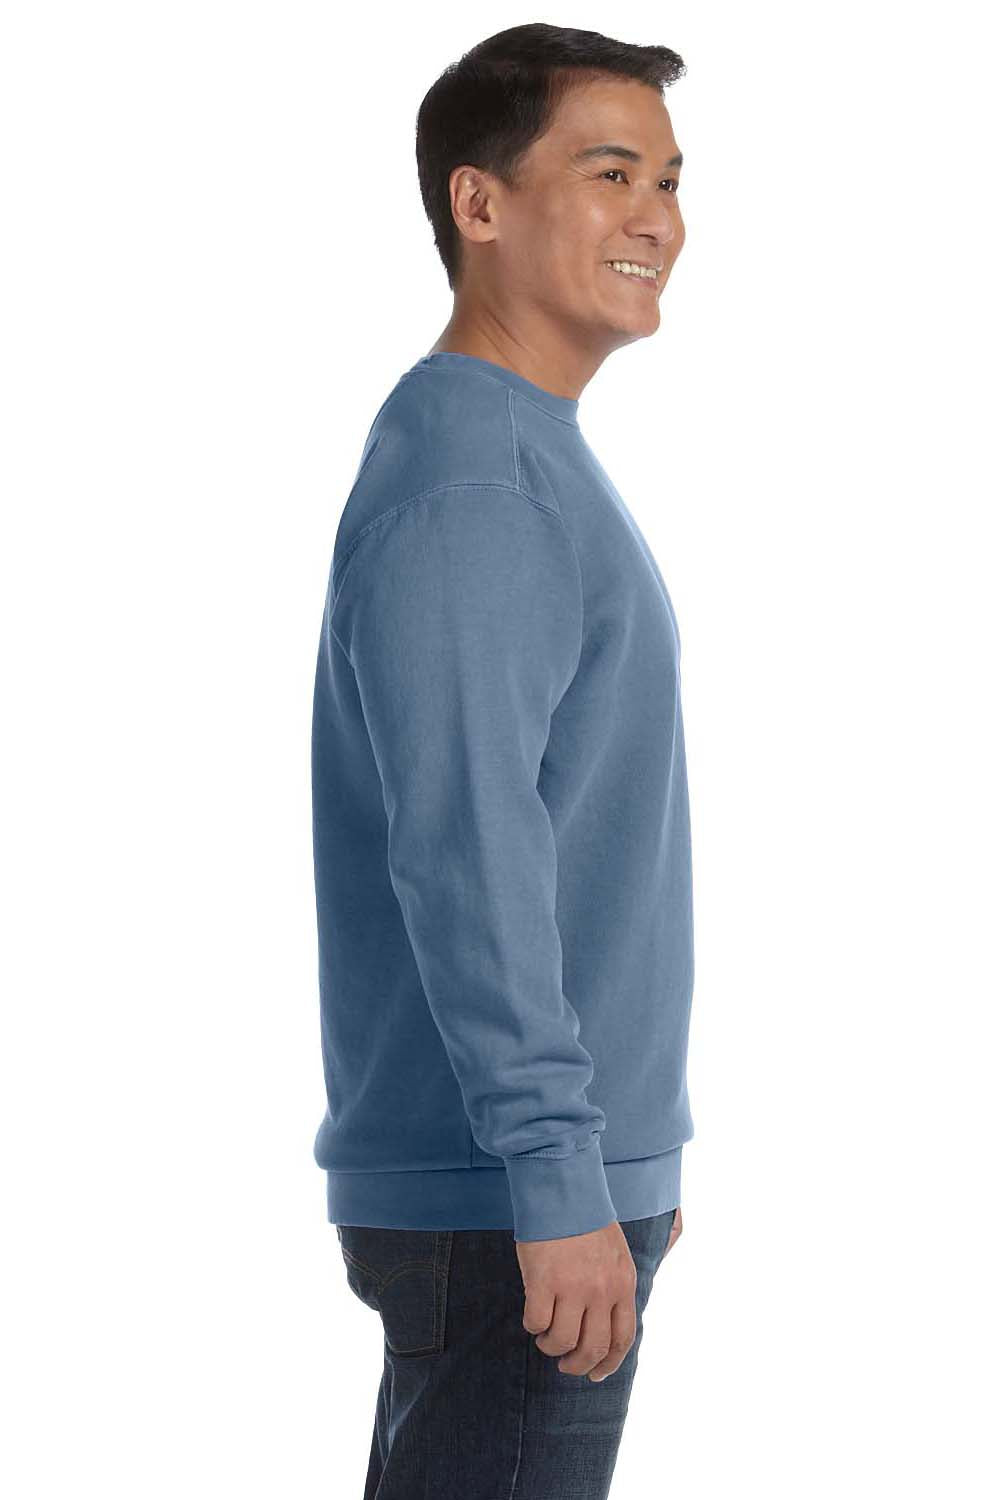 Comfort Colors 1566 Mens Crewneck Sweatshirt Blue Jean Side